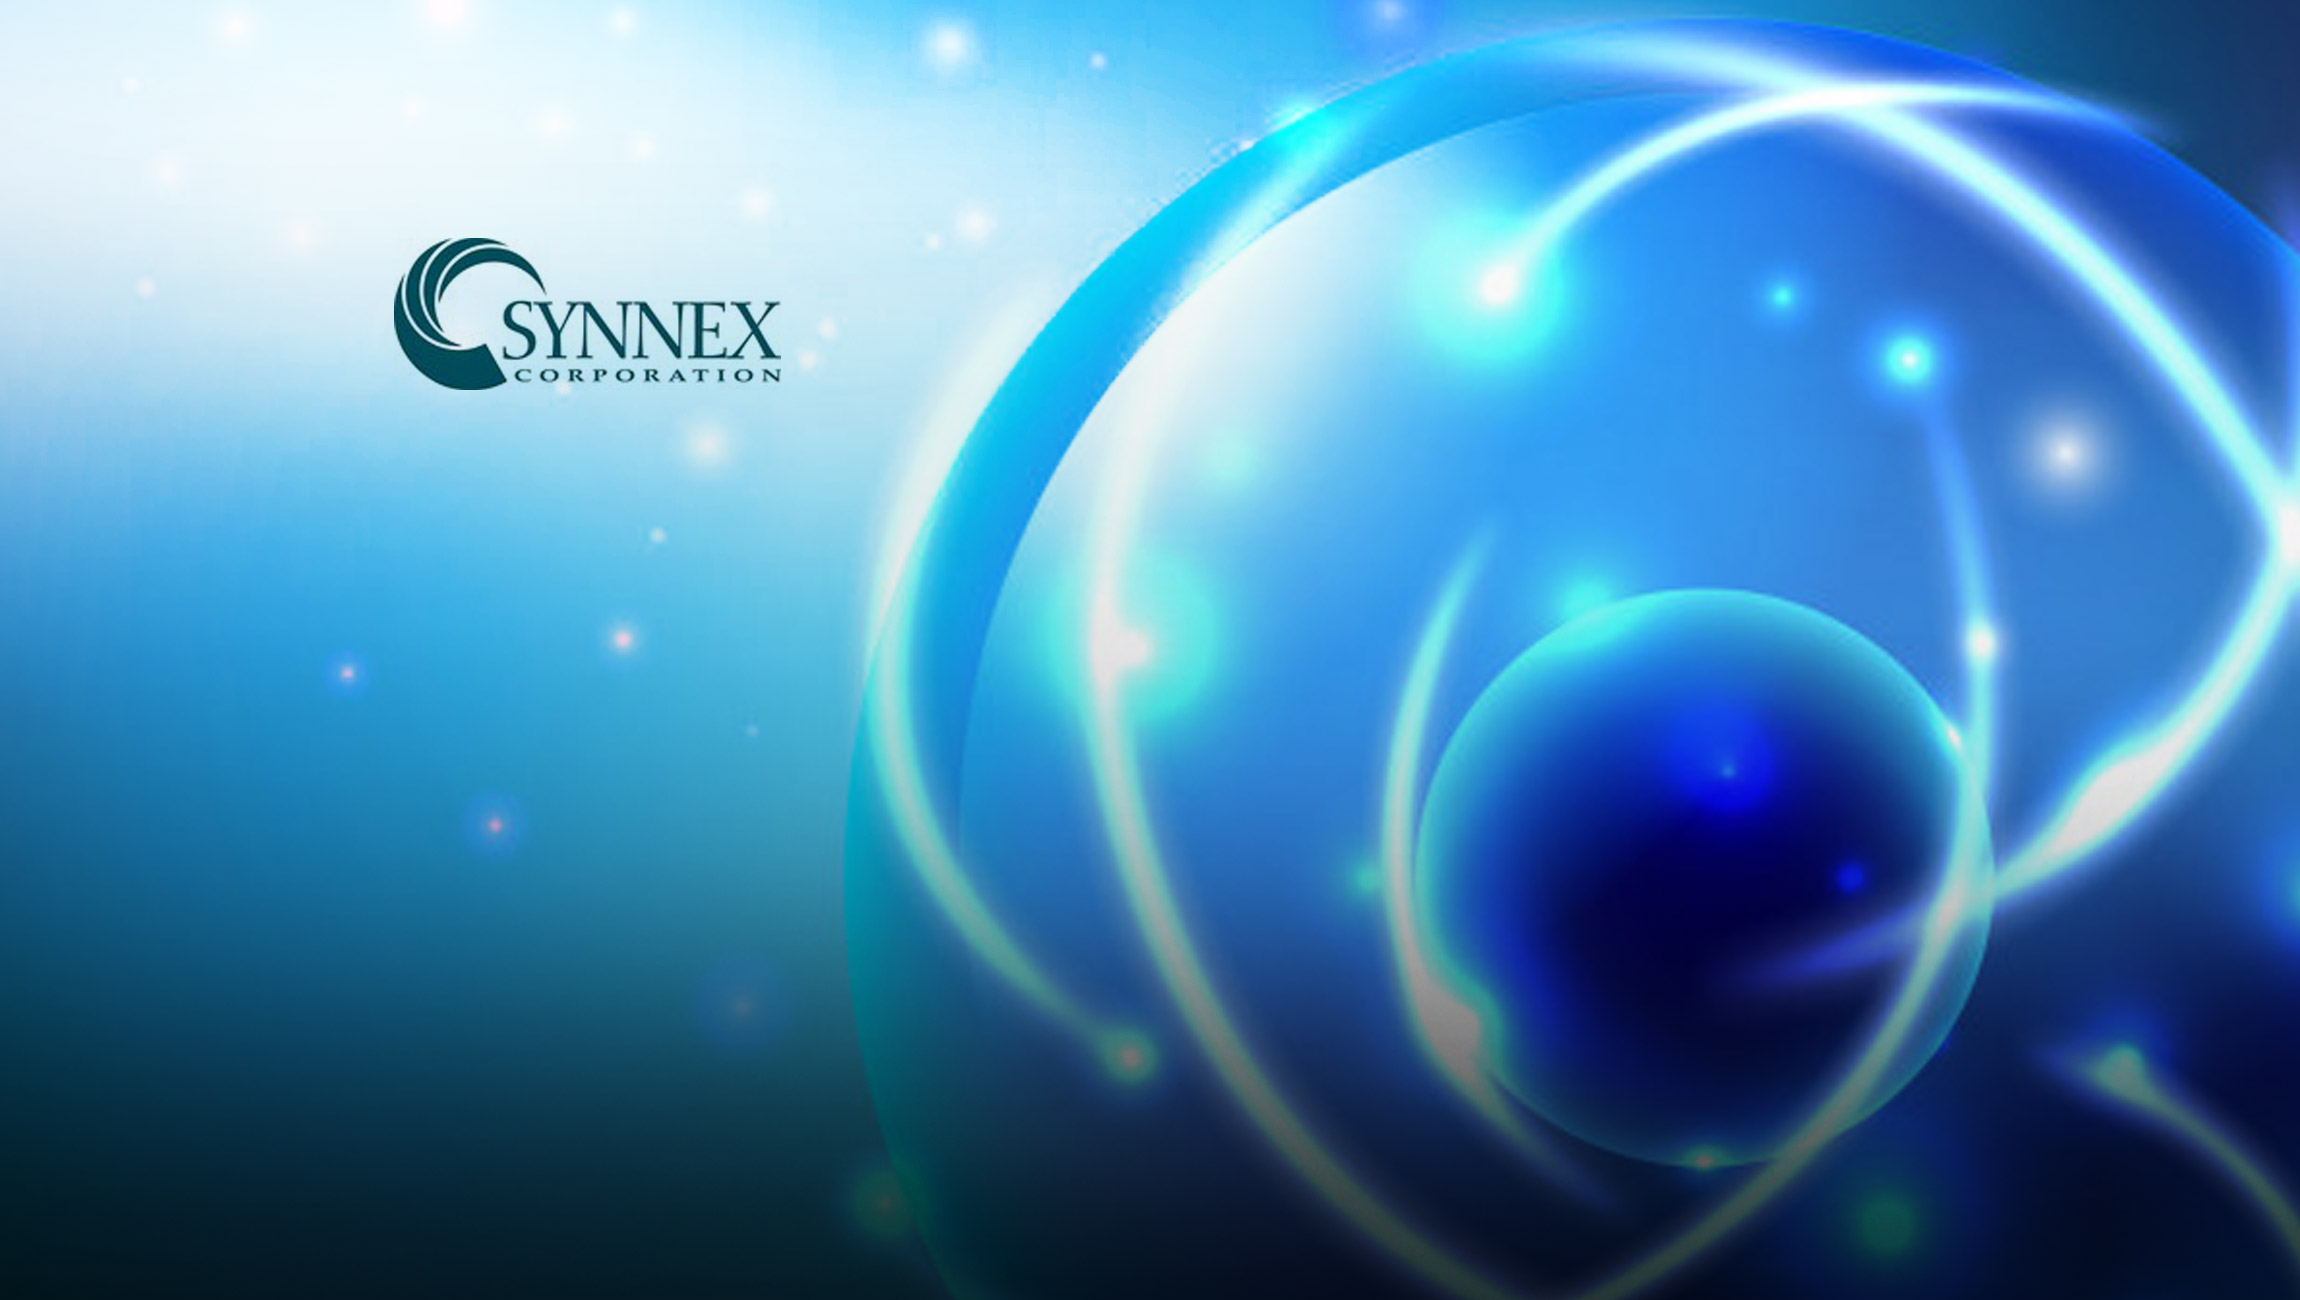 Panasonic Names SYNNEX Corporation 2019 Distributor of the Year